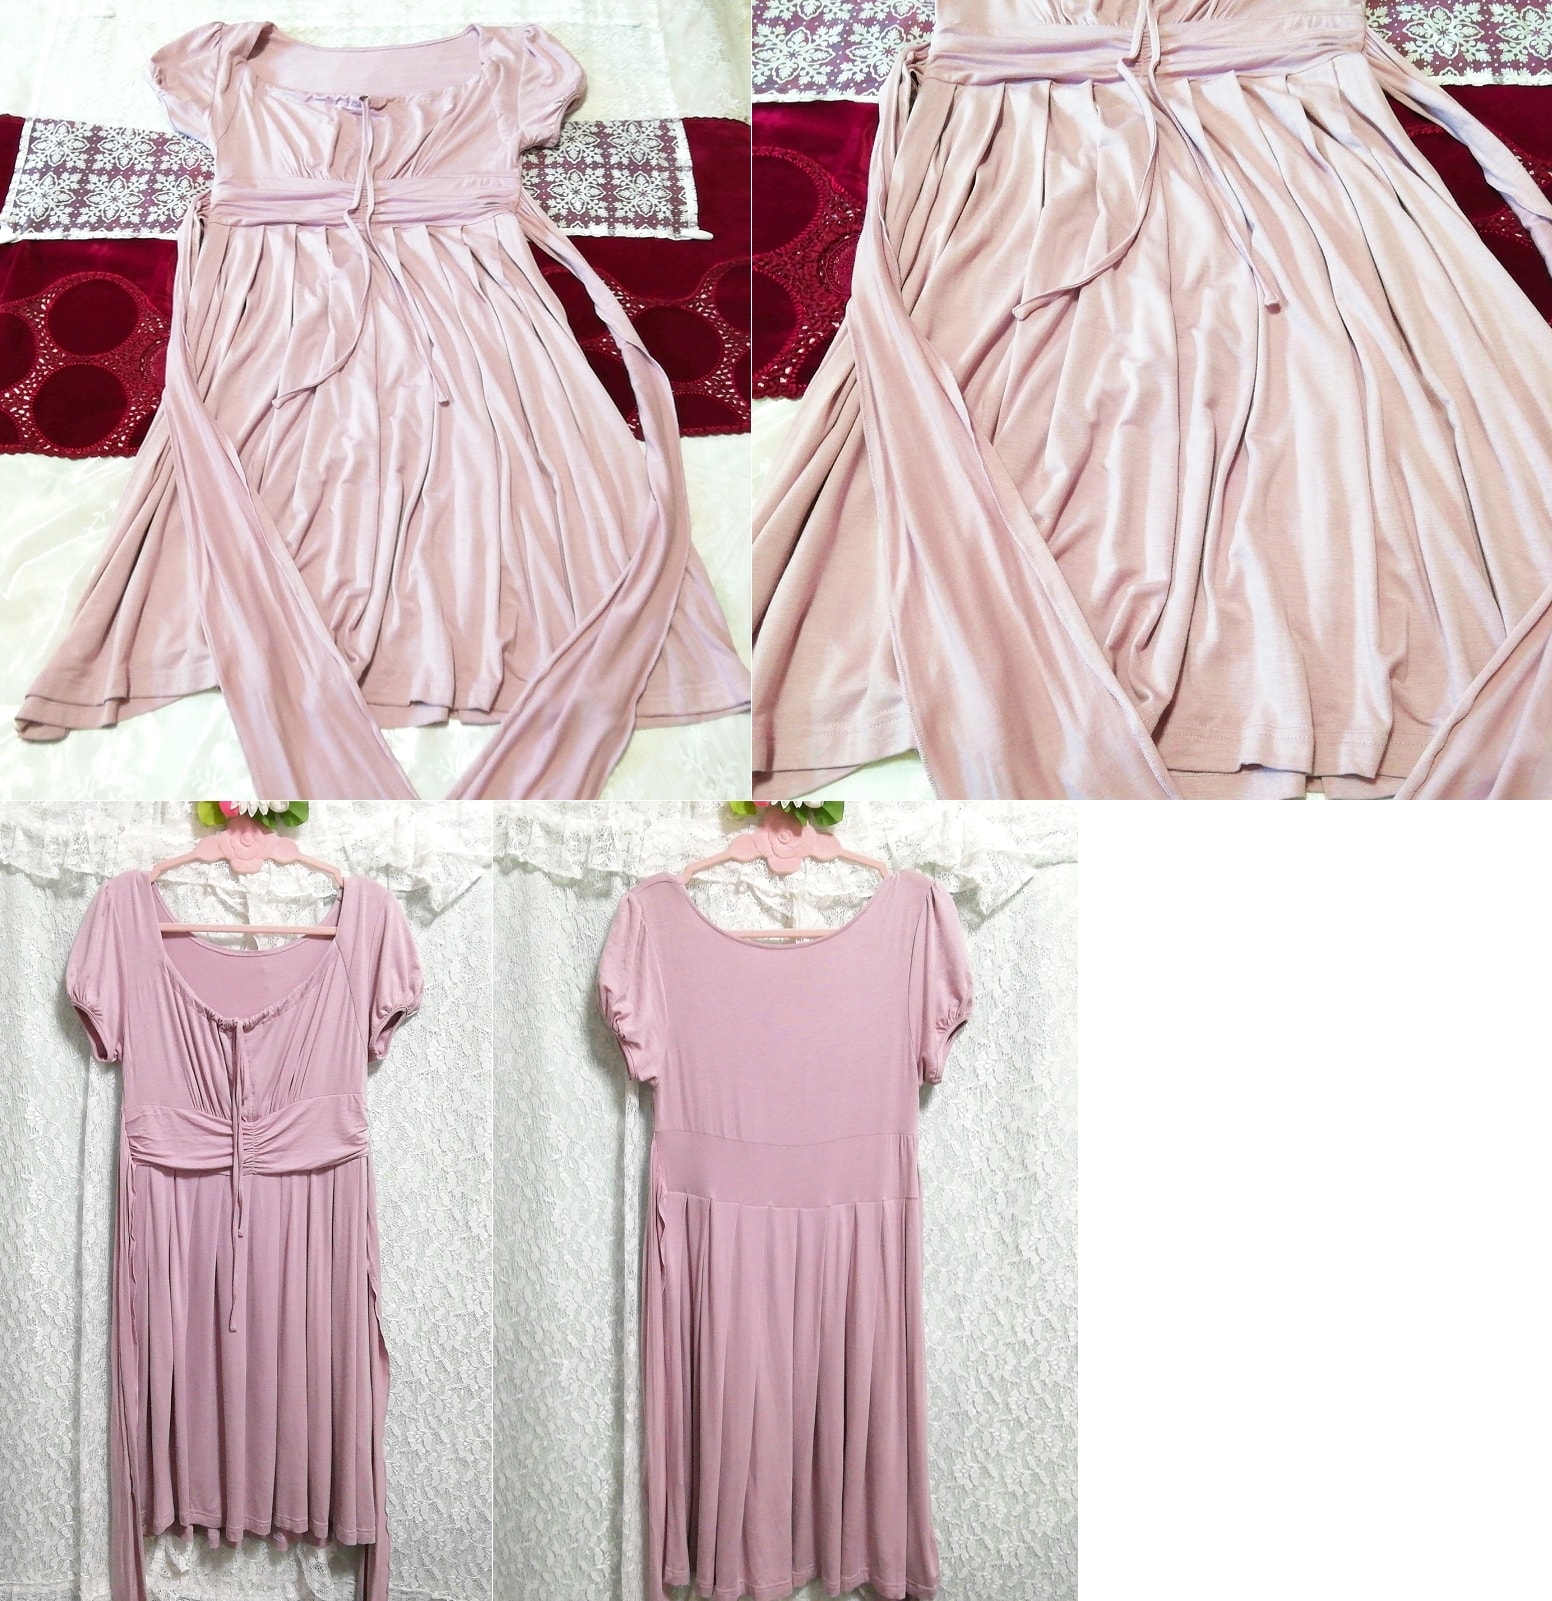 Light purple plain short sleeve tunic negligee nightgown nightwear dress, tunic, short sleeve, m size